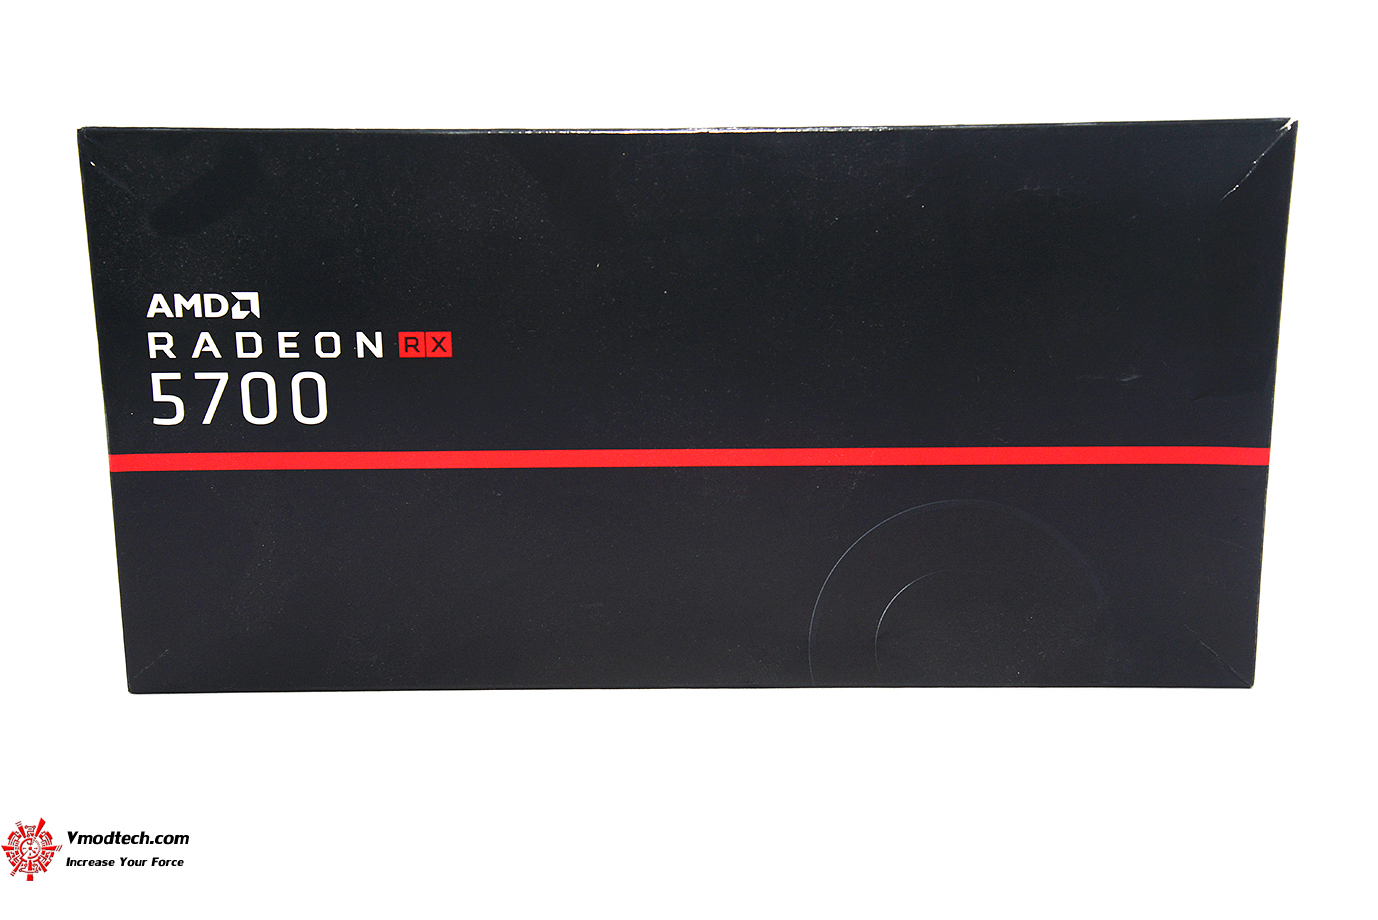 dsc 9814 AMD RADEON RX 5700 REVIEW 